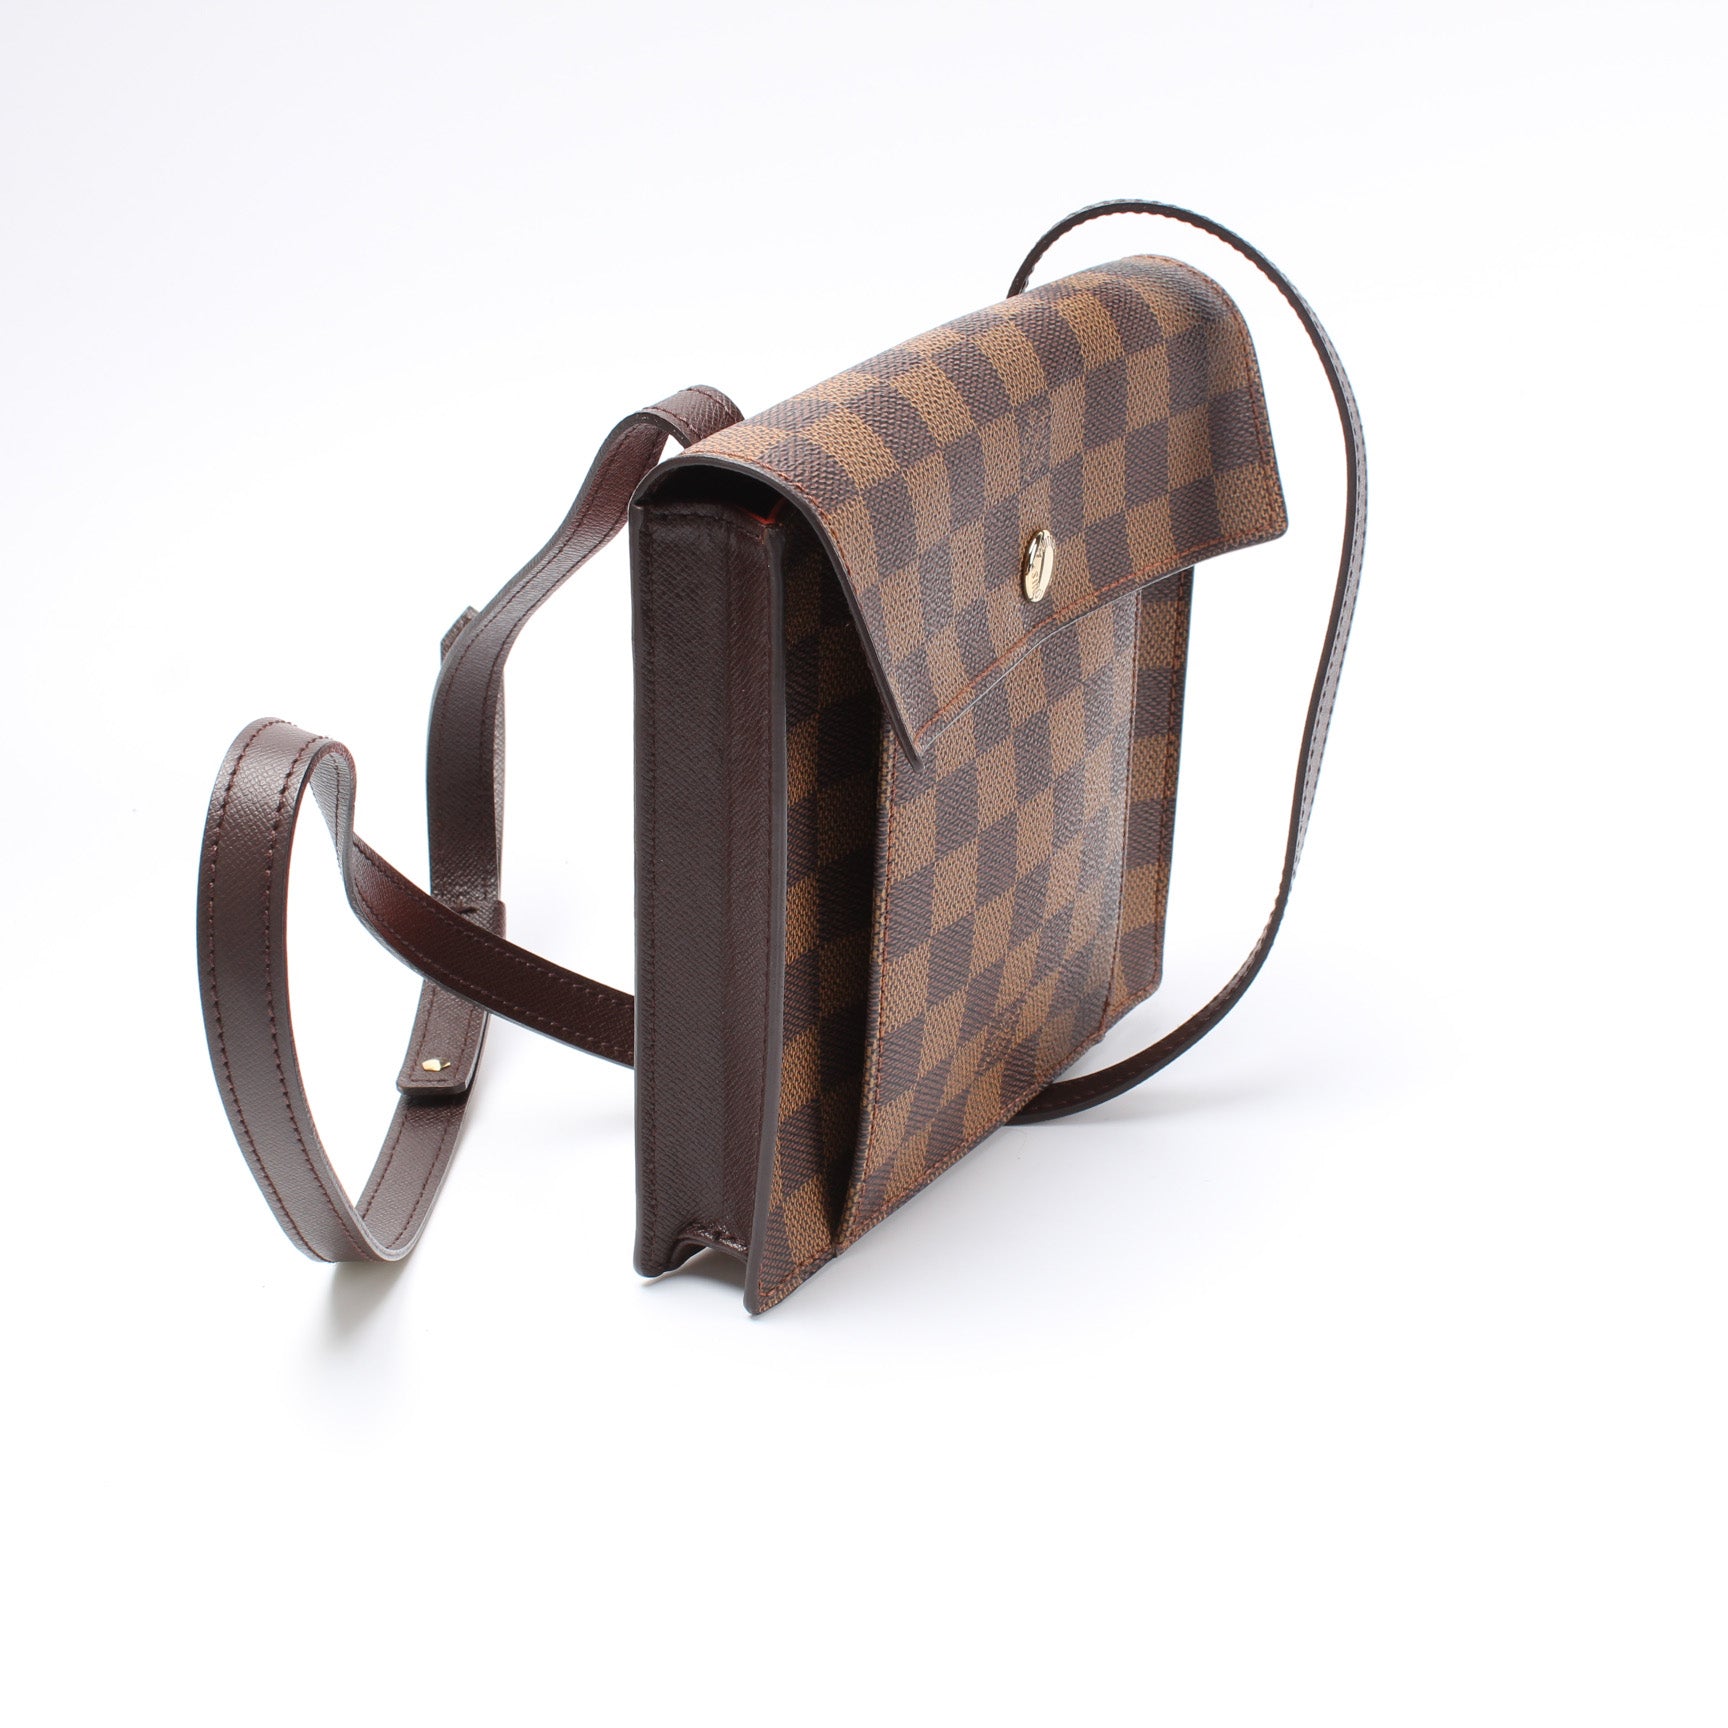 Louis Vuitton Pimlico Damier Ebene Crossbody Bag